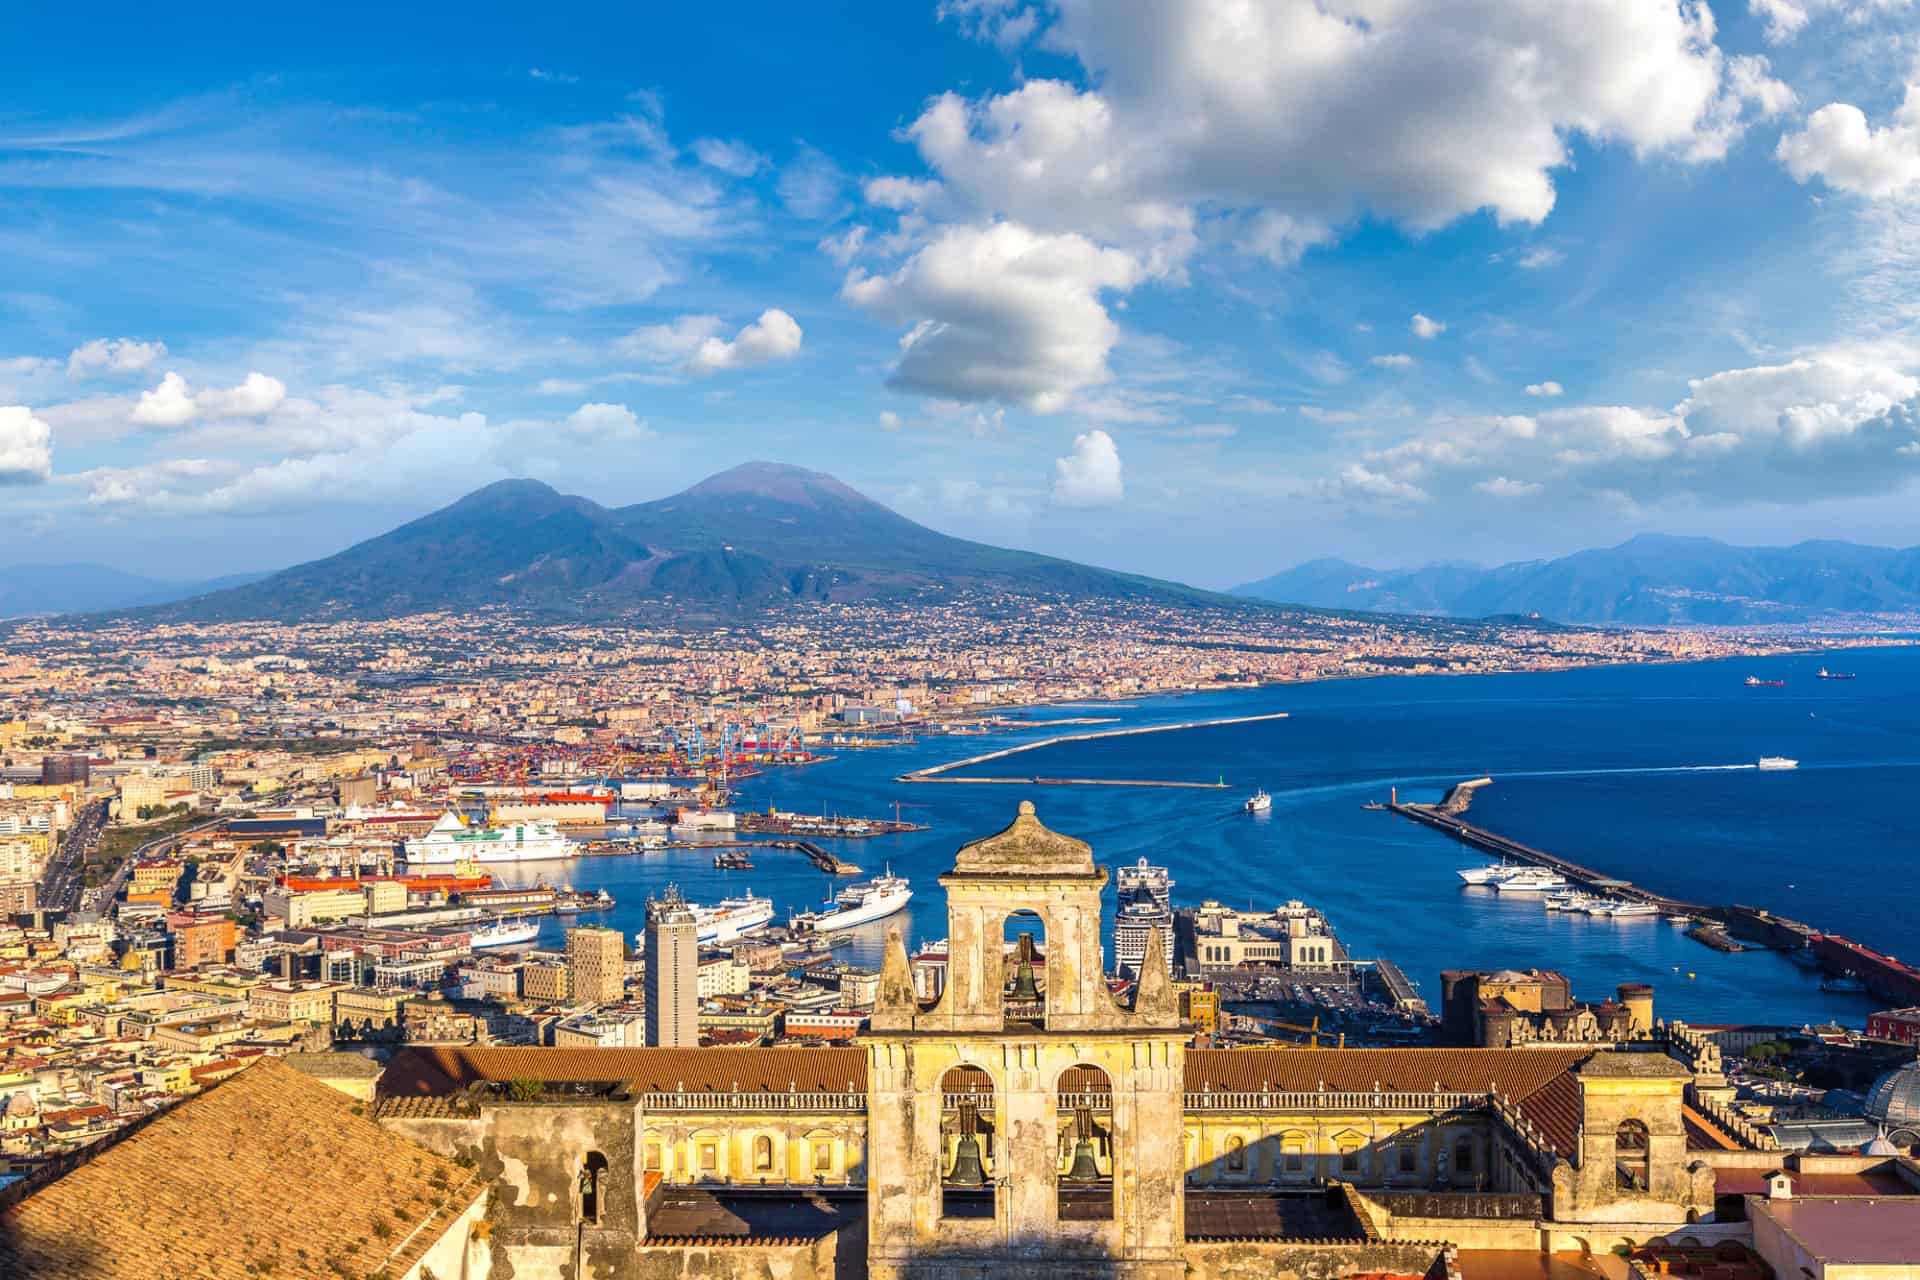 Napoli and mount Vesuvius in the background